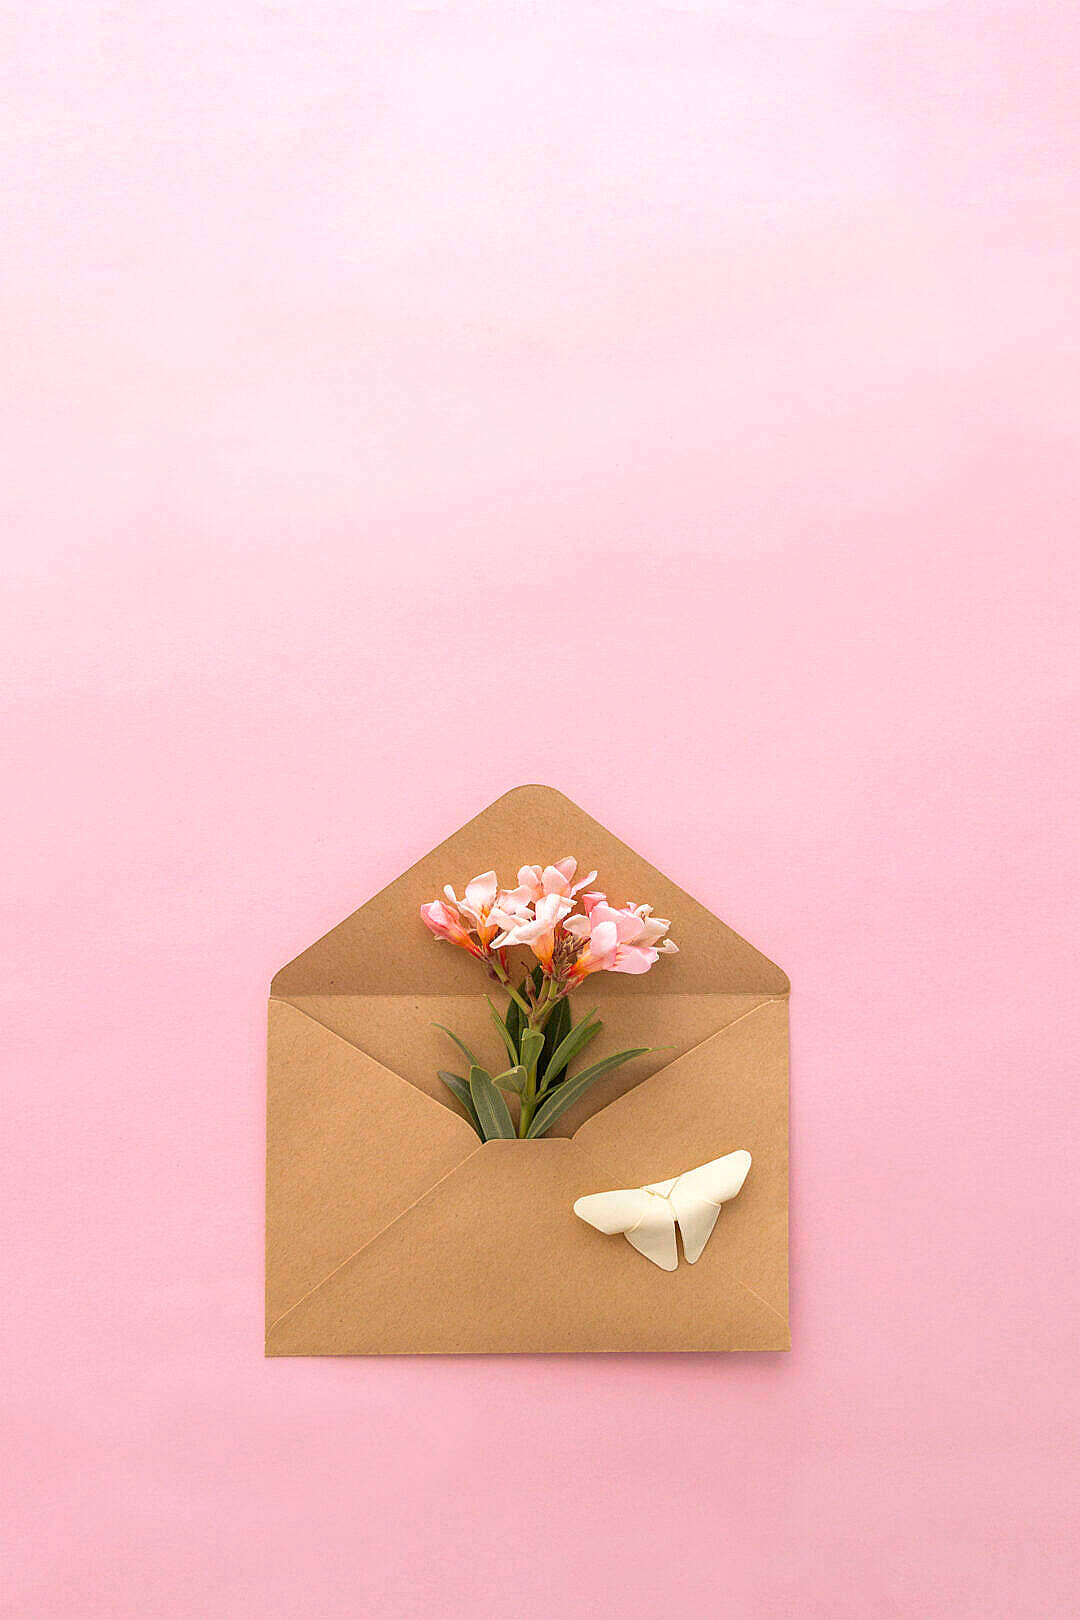 Natural Flower In An Envelope